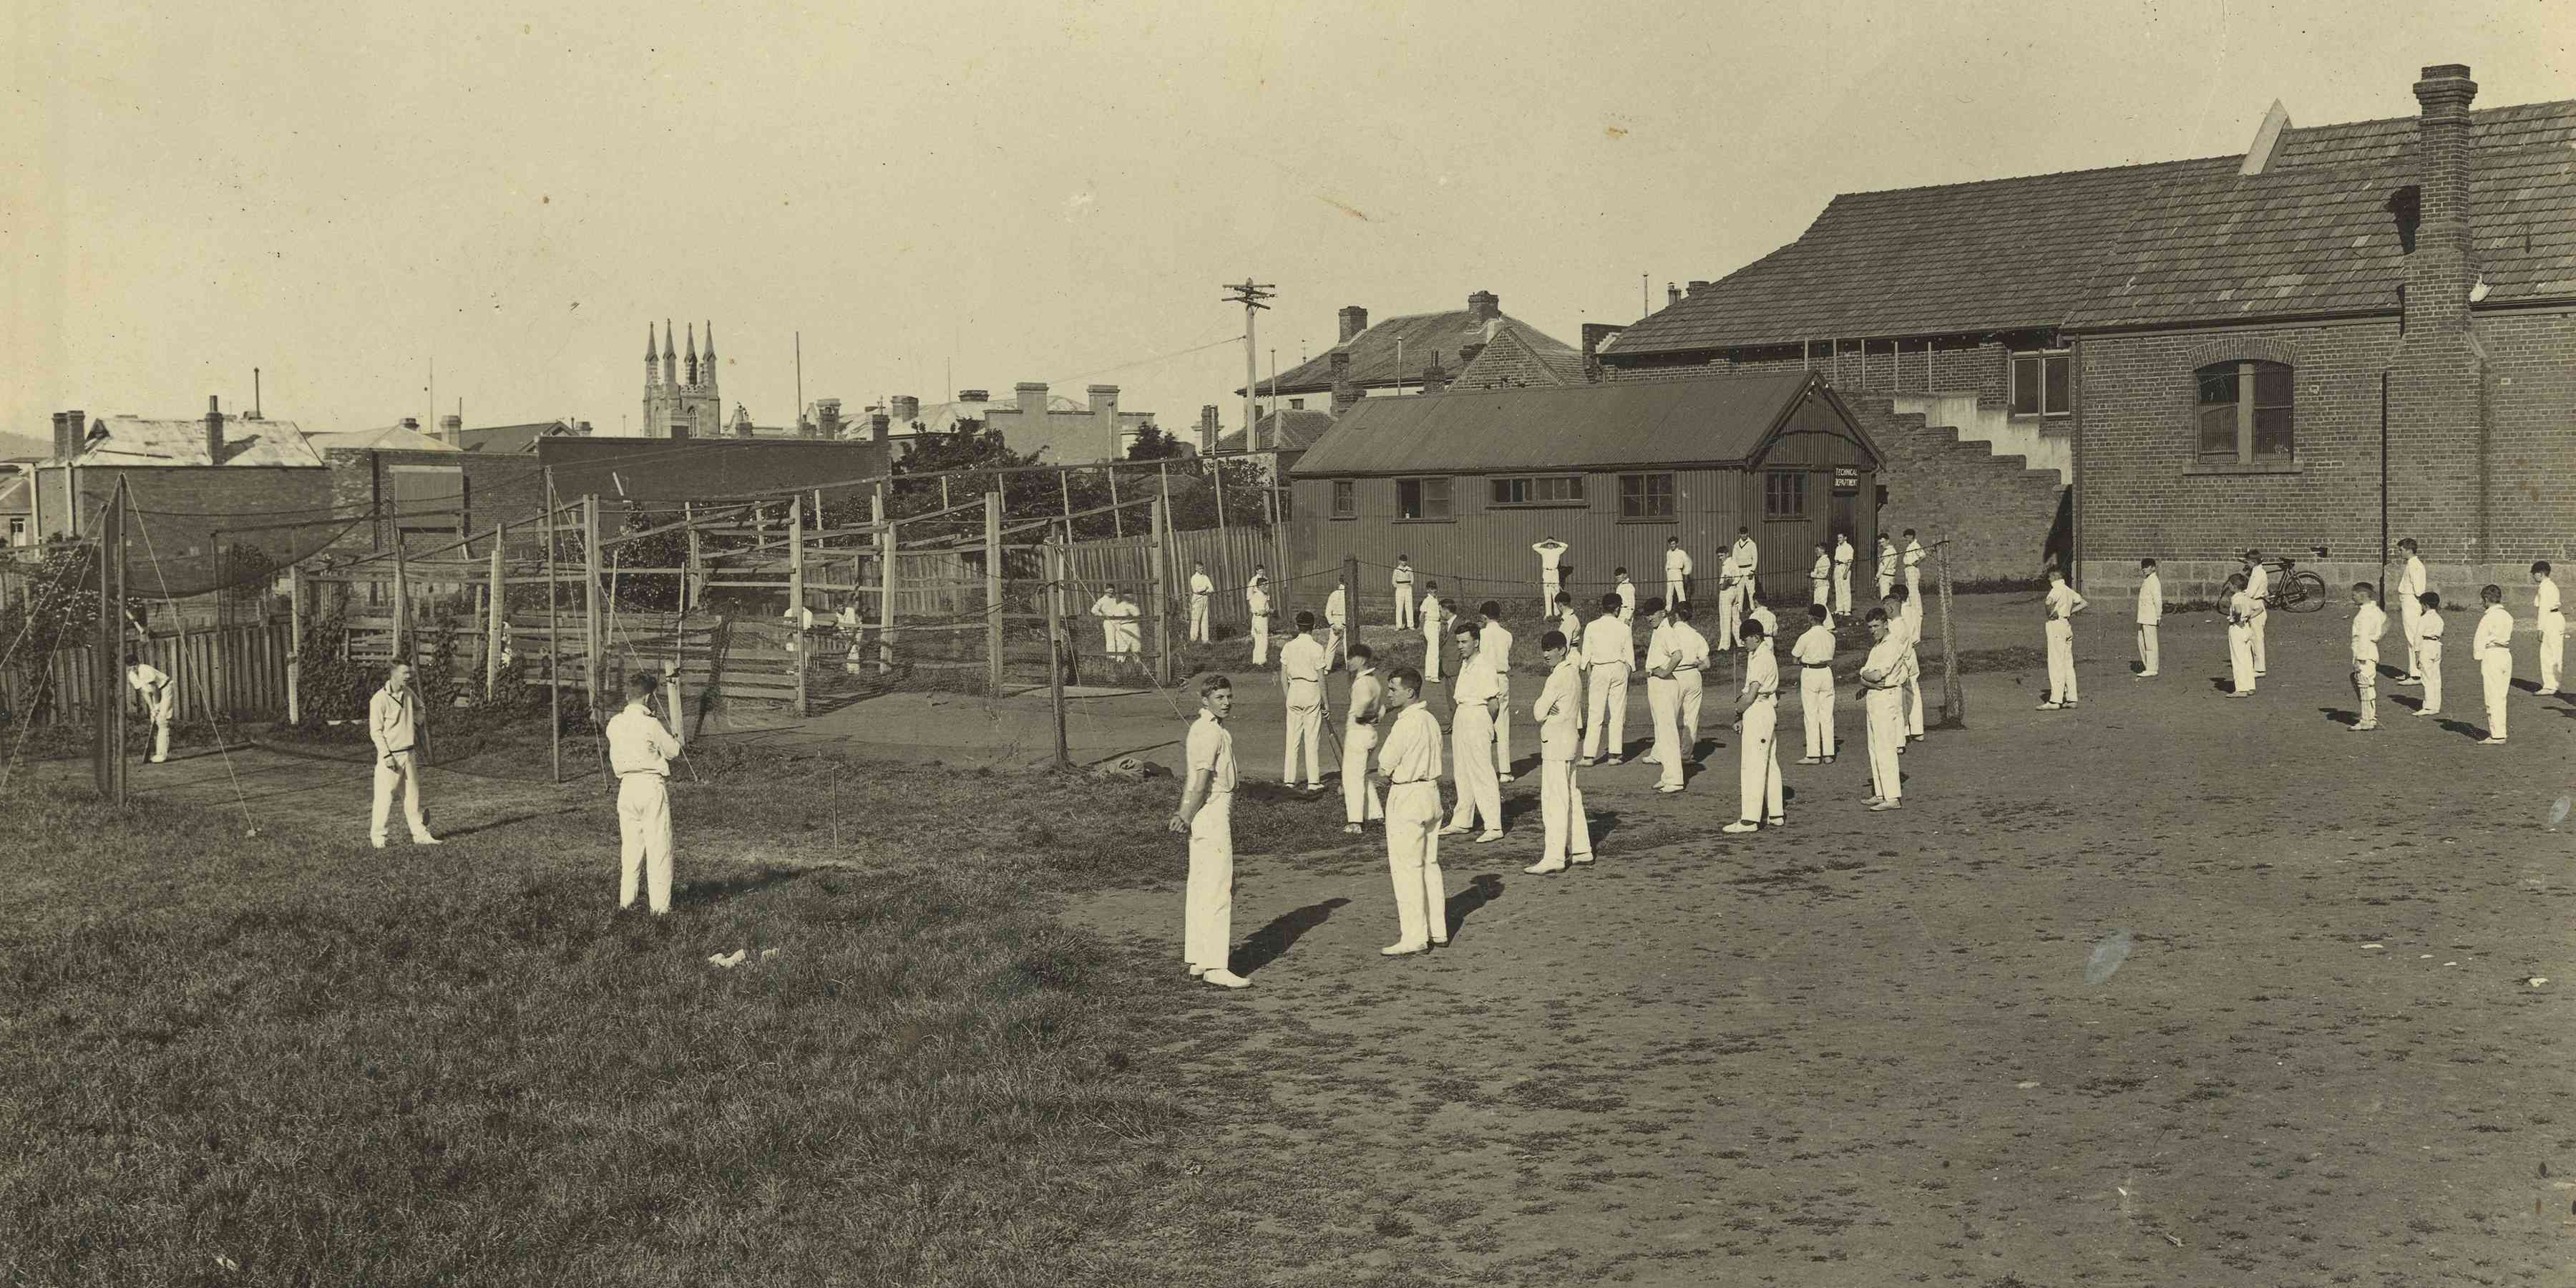 Cricket practice at Macquarie Street, 1929.